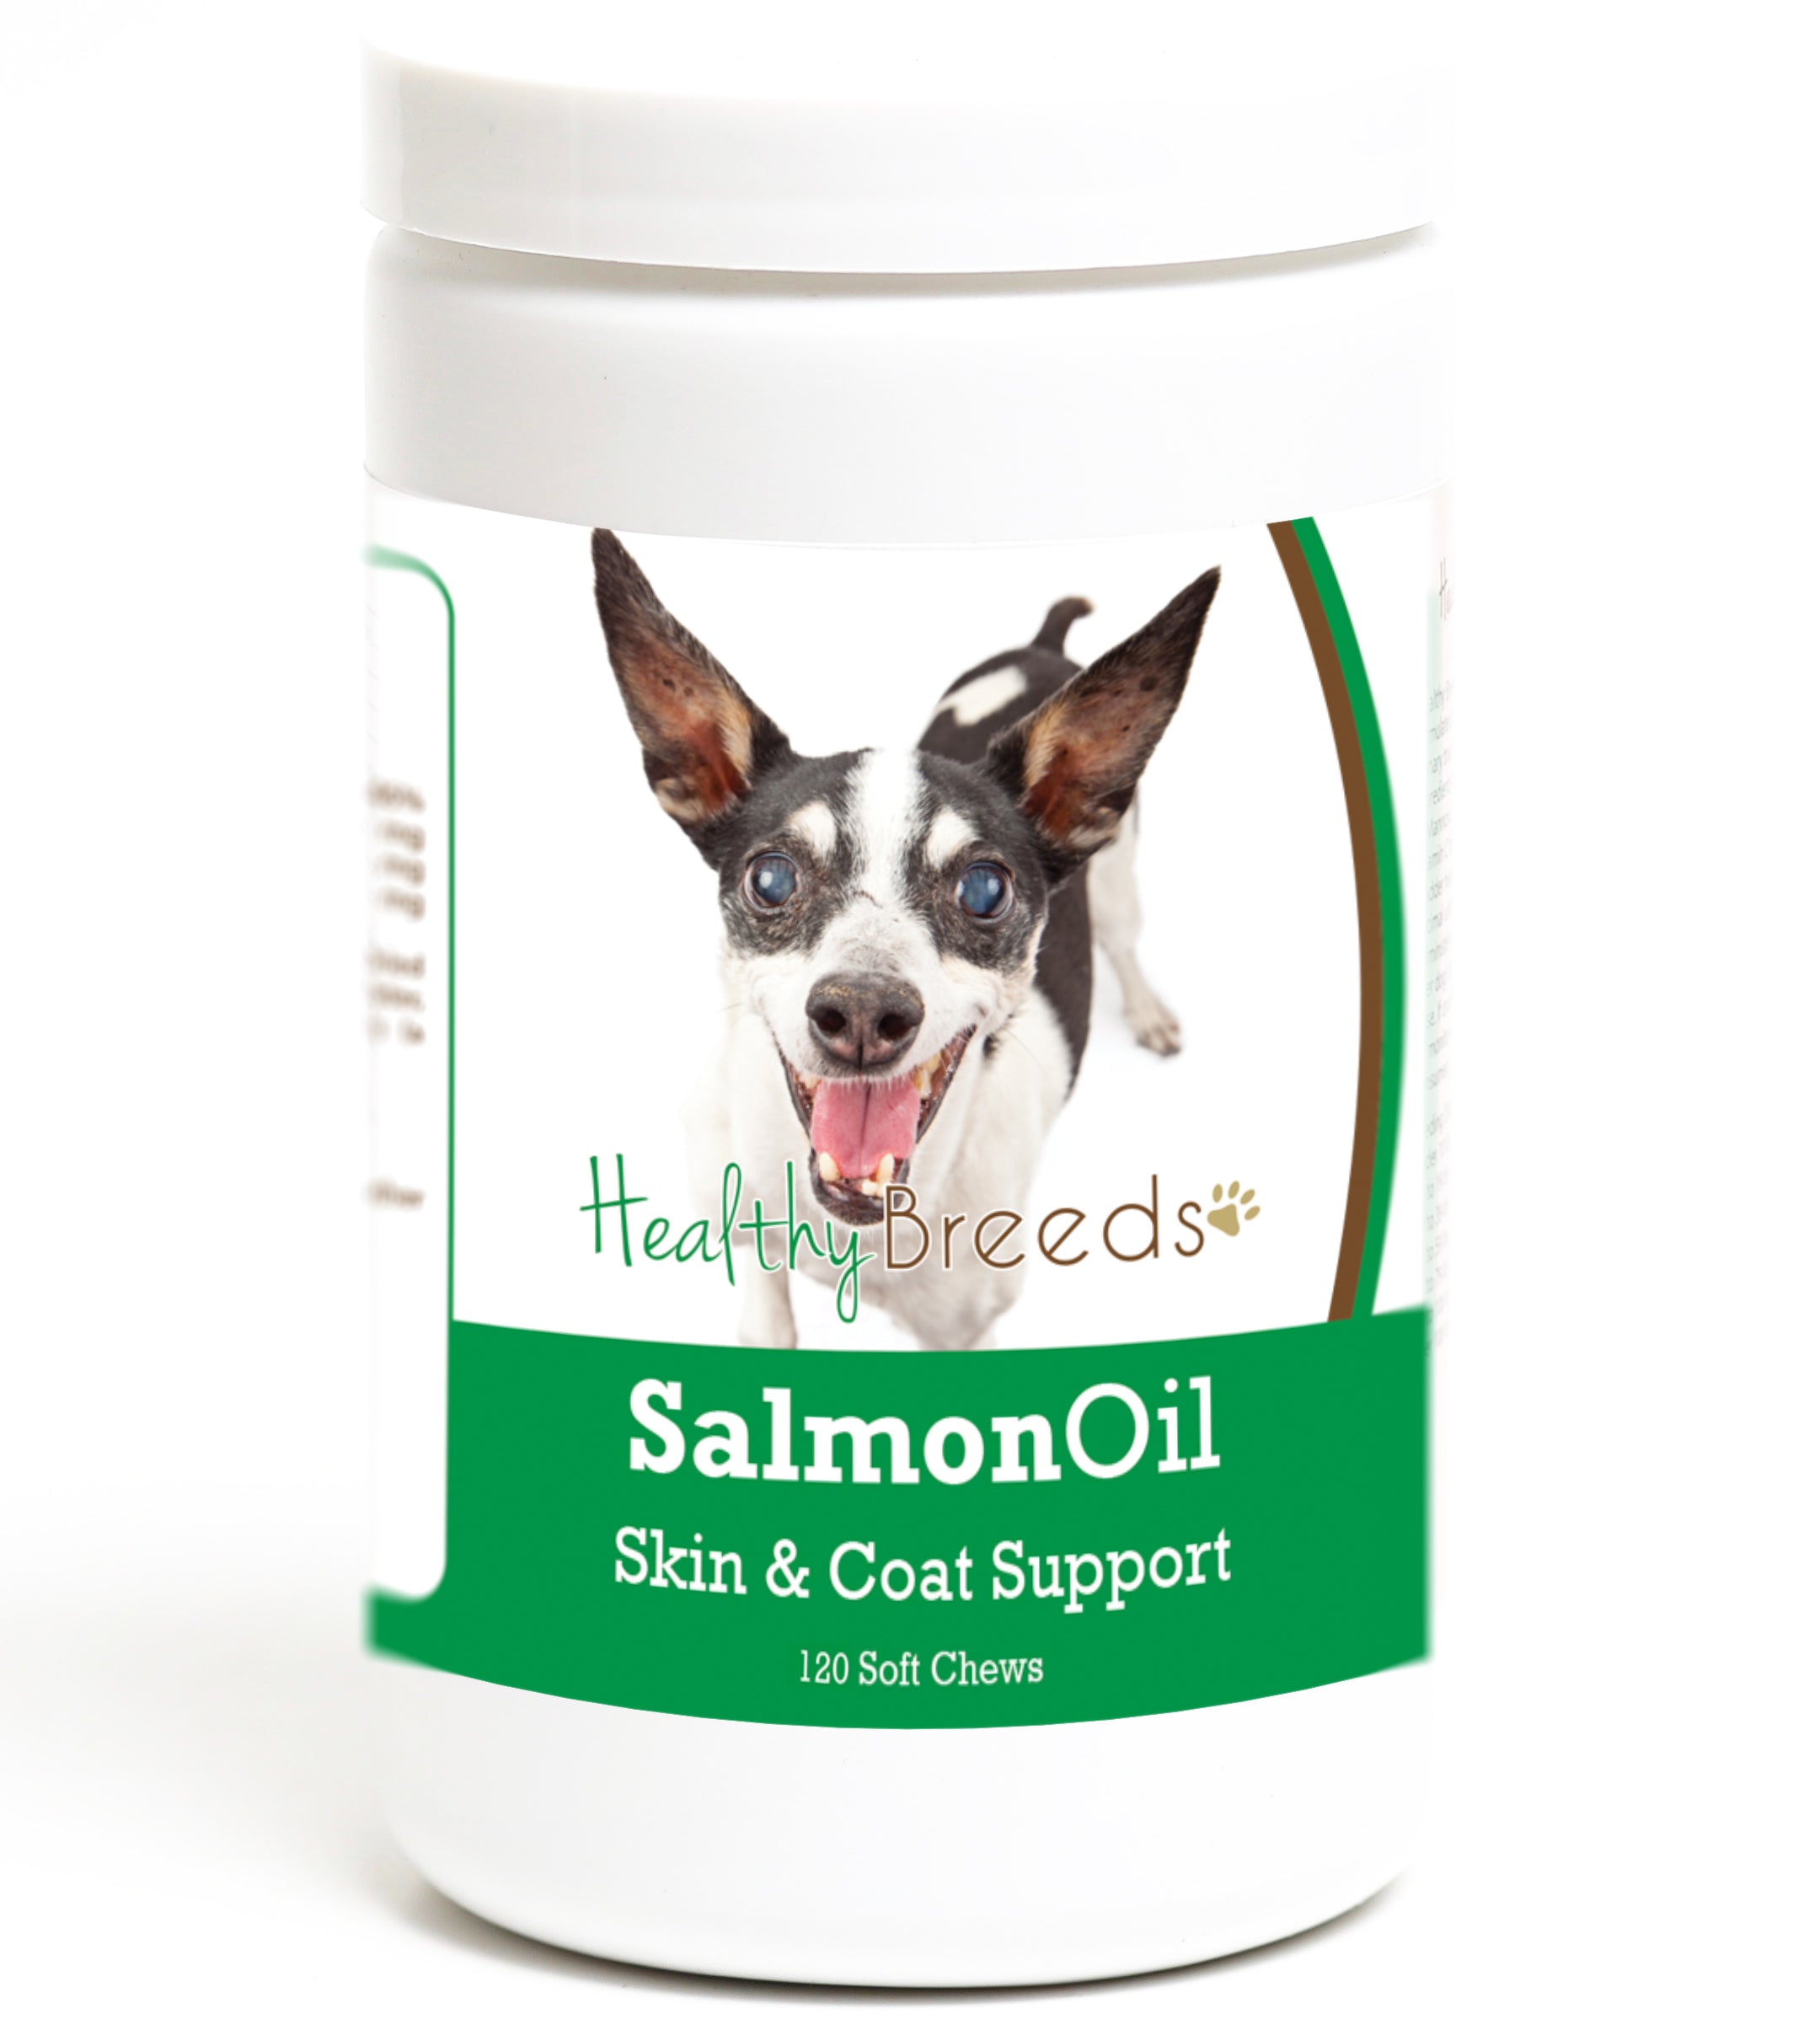 Rat Terrier Salmon Oil Soft Chews 120 Count